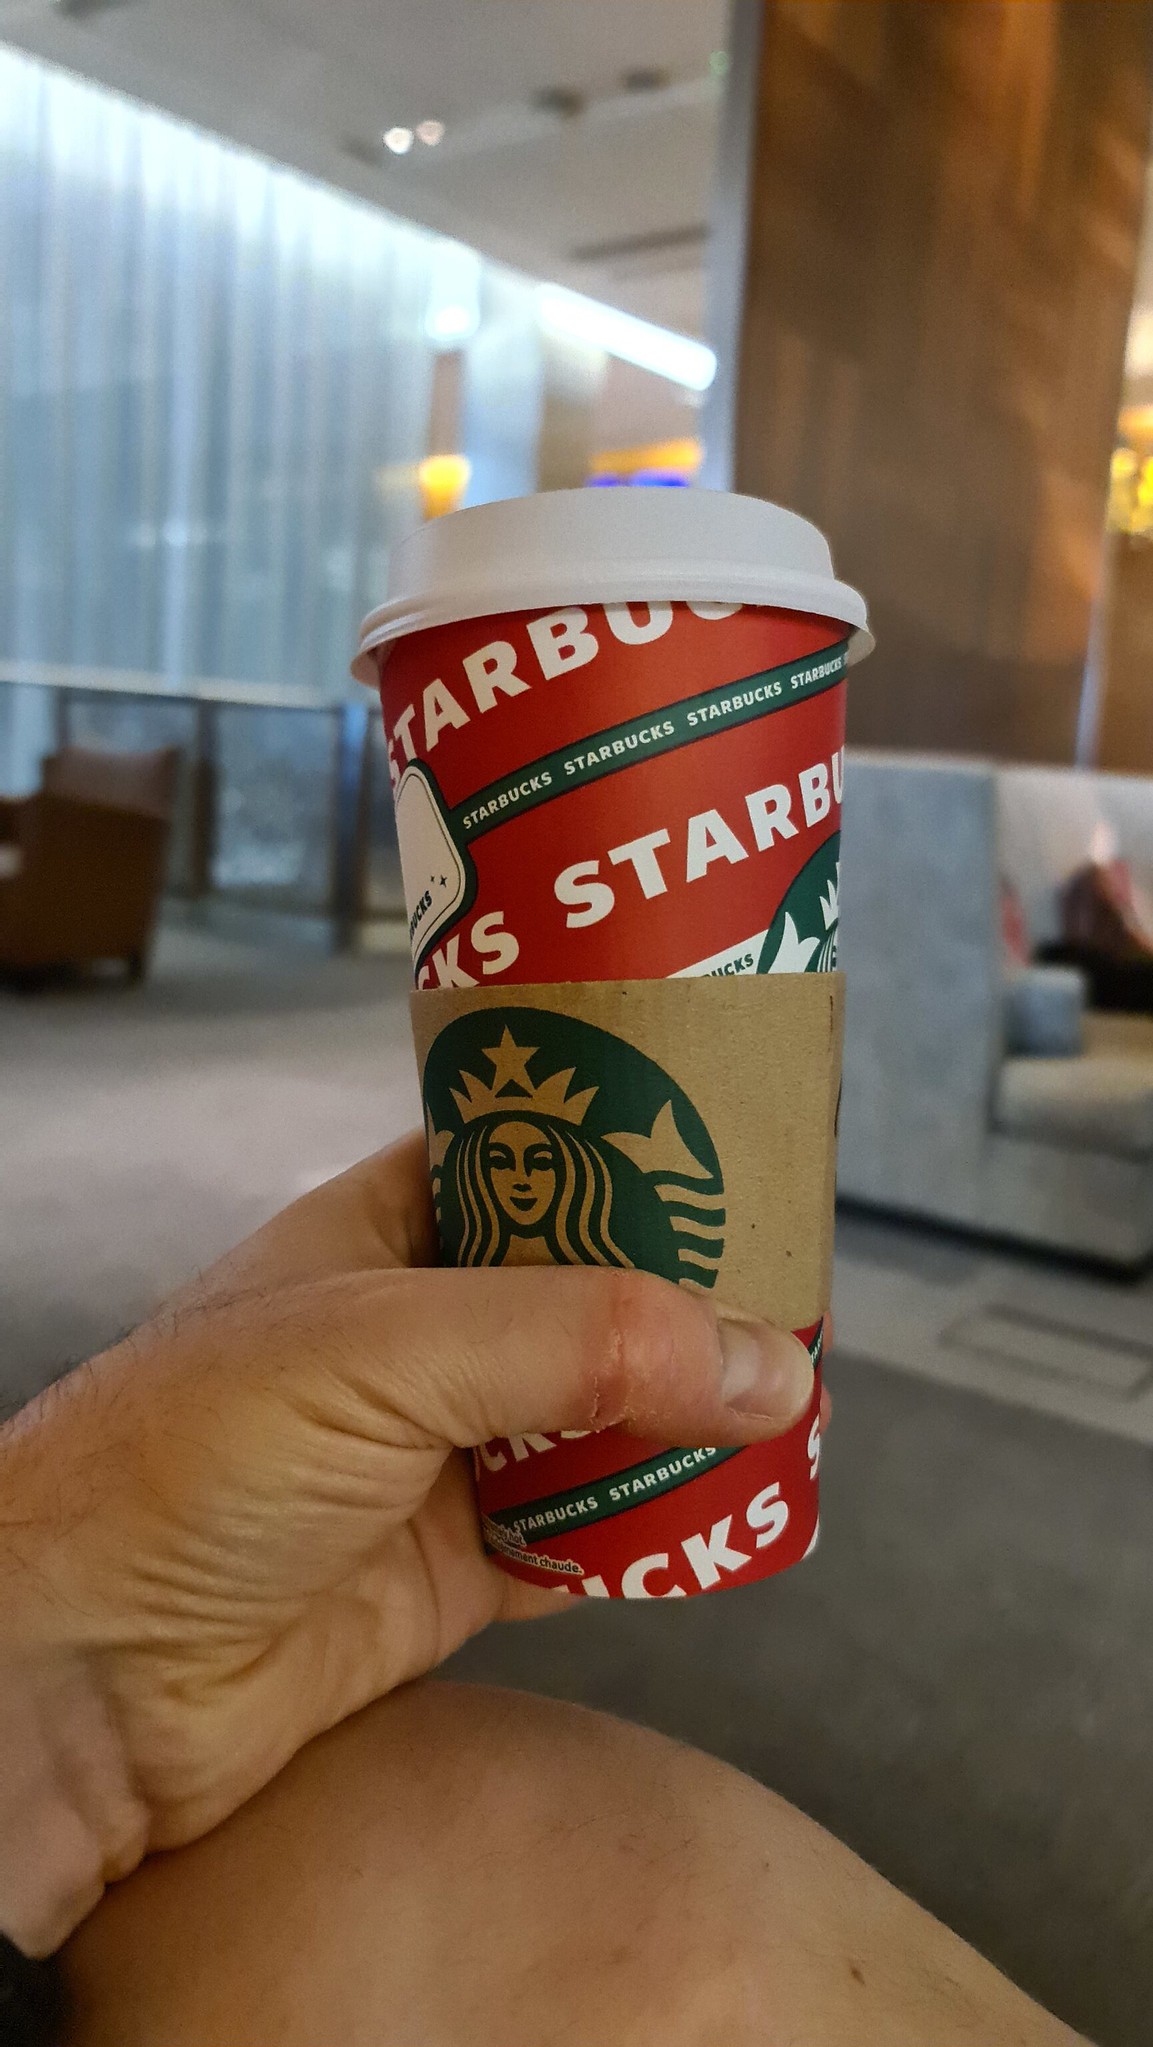 Enjoying my Starbucks in the CCR at Heathrow